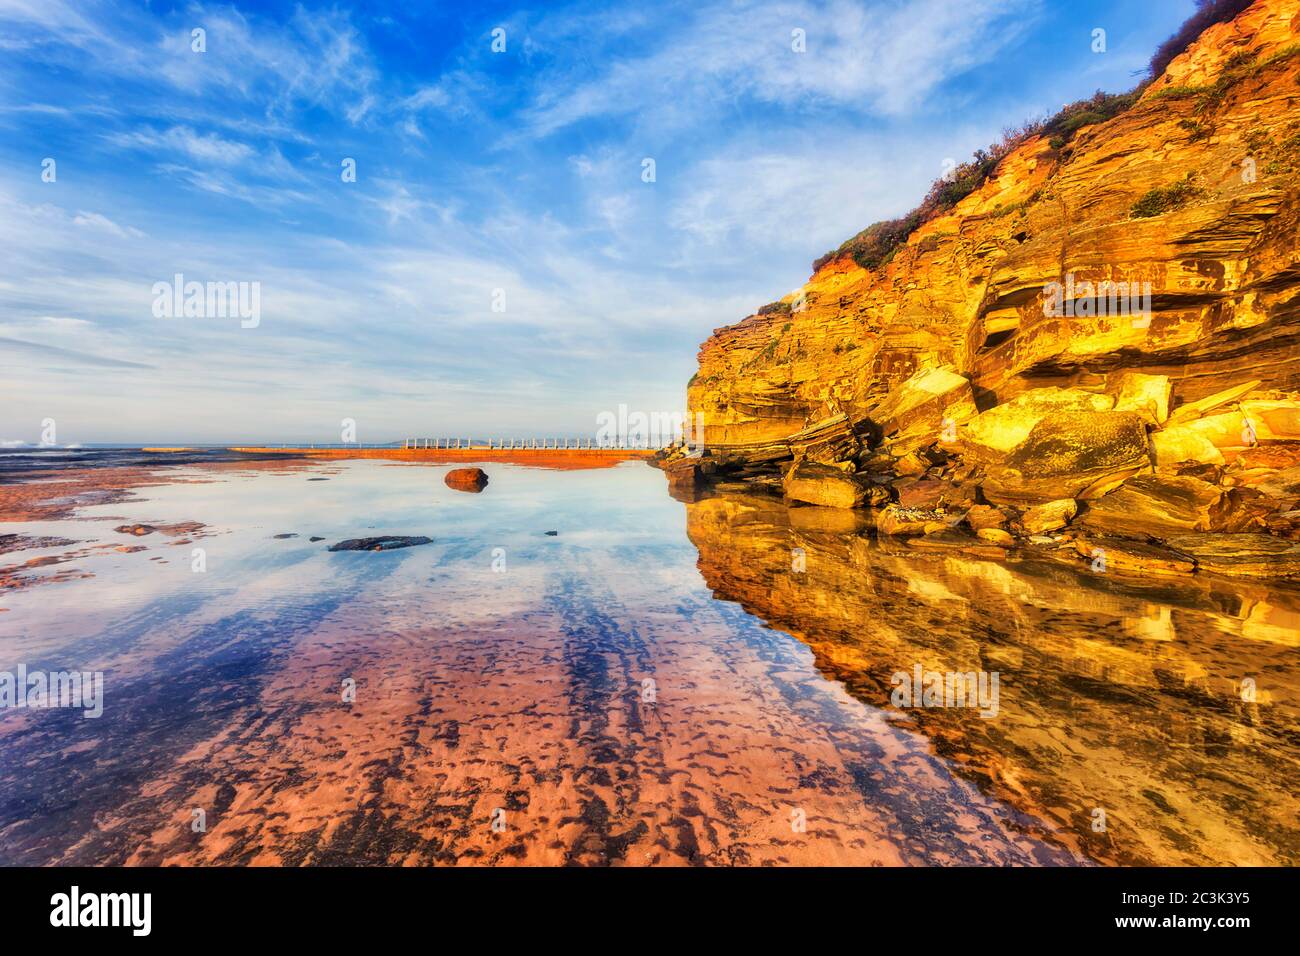 Rocas de arenisca de Narrabeen cabo sobre el fondo del mar de la playa de Narrabeen en la marea baja bajo el cálido sol del amanecer. Foto de stock